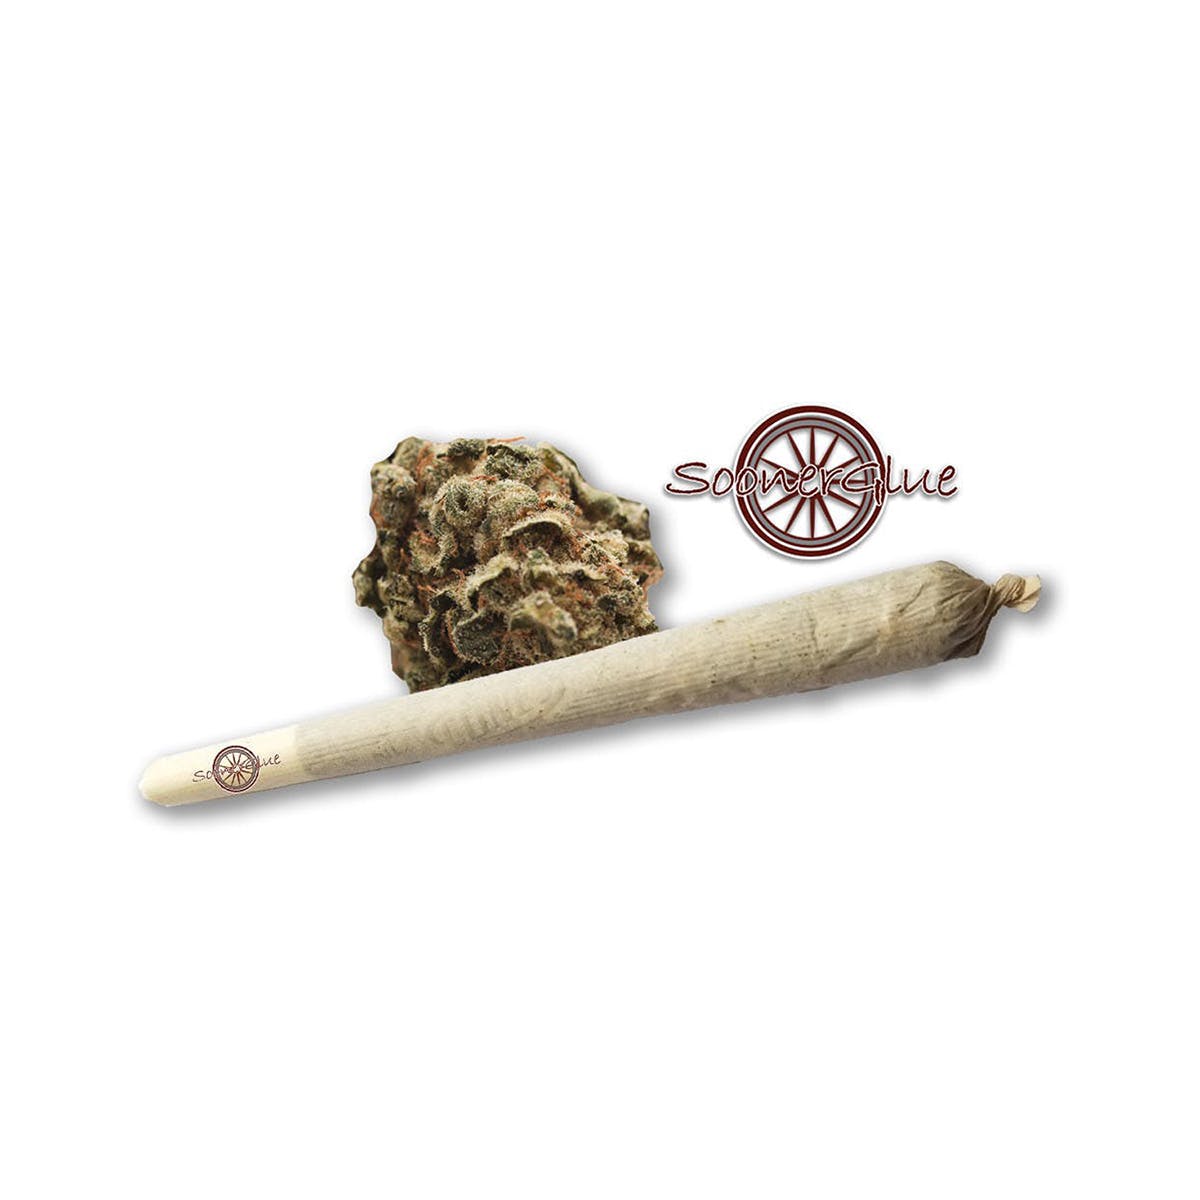 marijuana-dispensaries-lady-janes-naturals-in-tulsa-sooner-glue-pre-roll